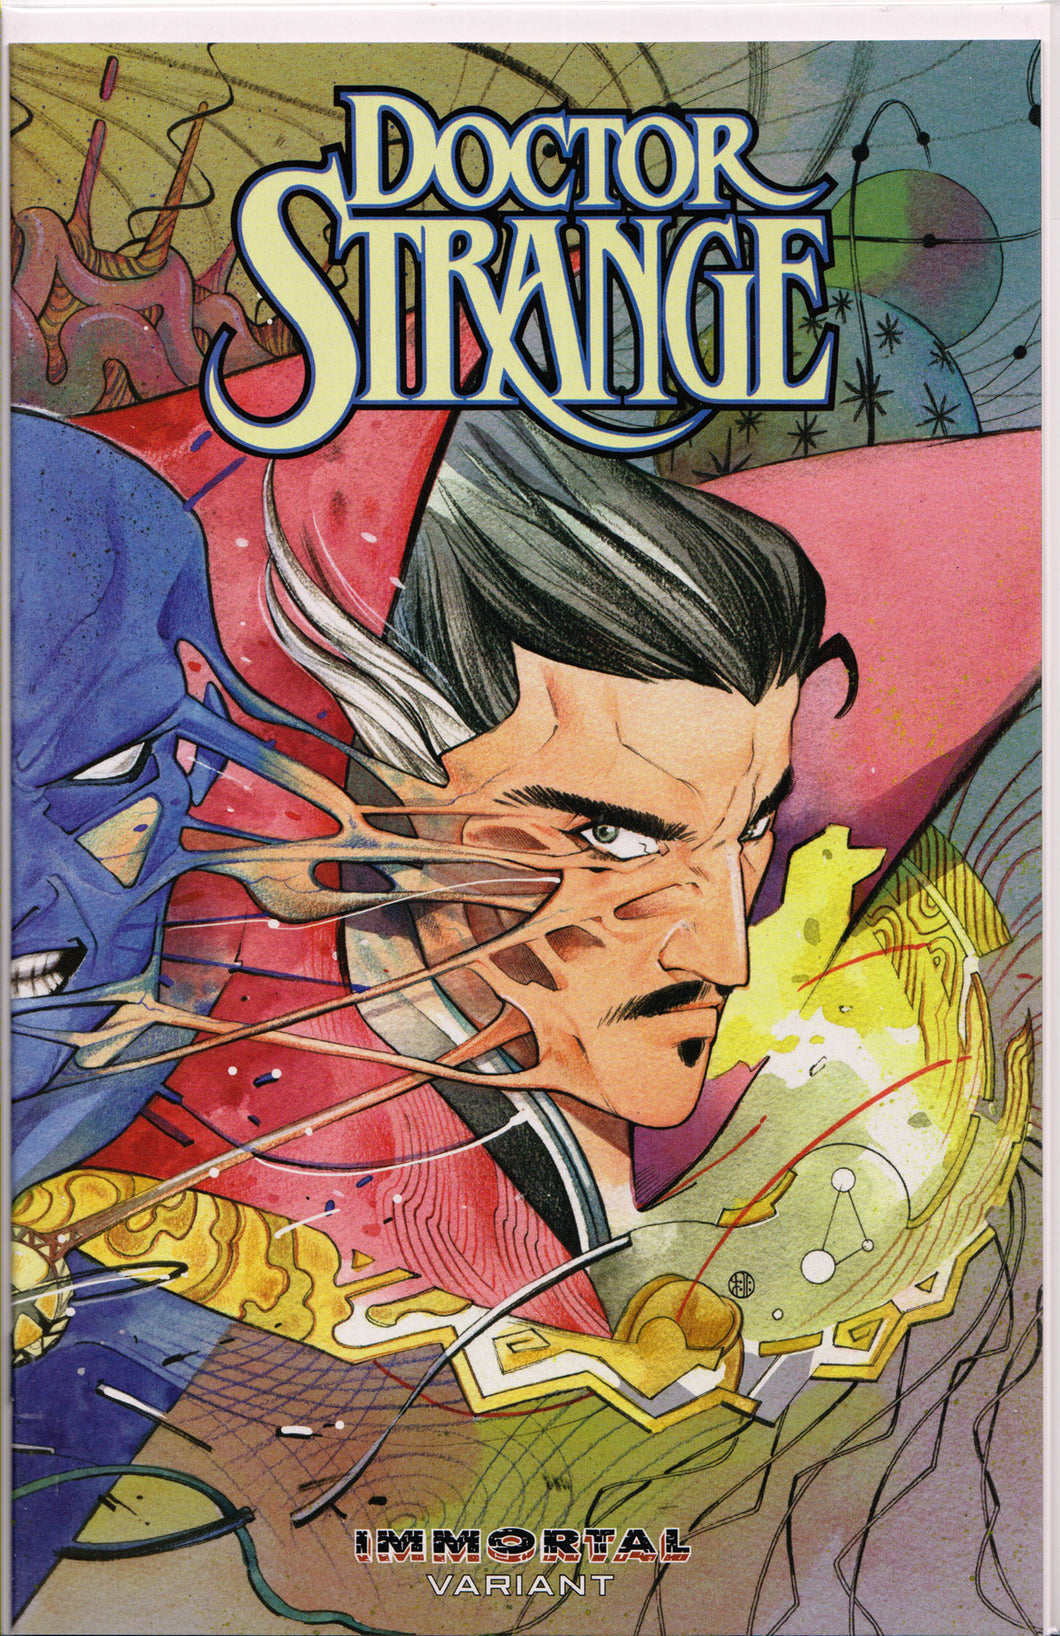 DOCTOR STRANGE #20 (IMMORTAL VARIANT) COMIC BOOK ~ Marvel Comics